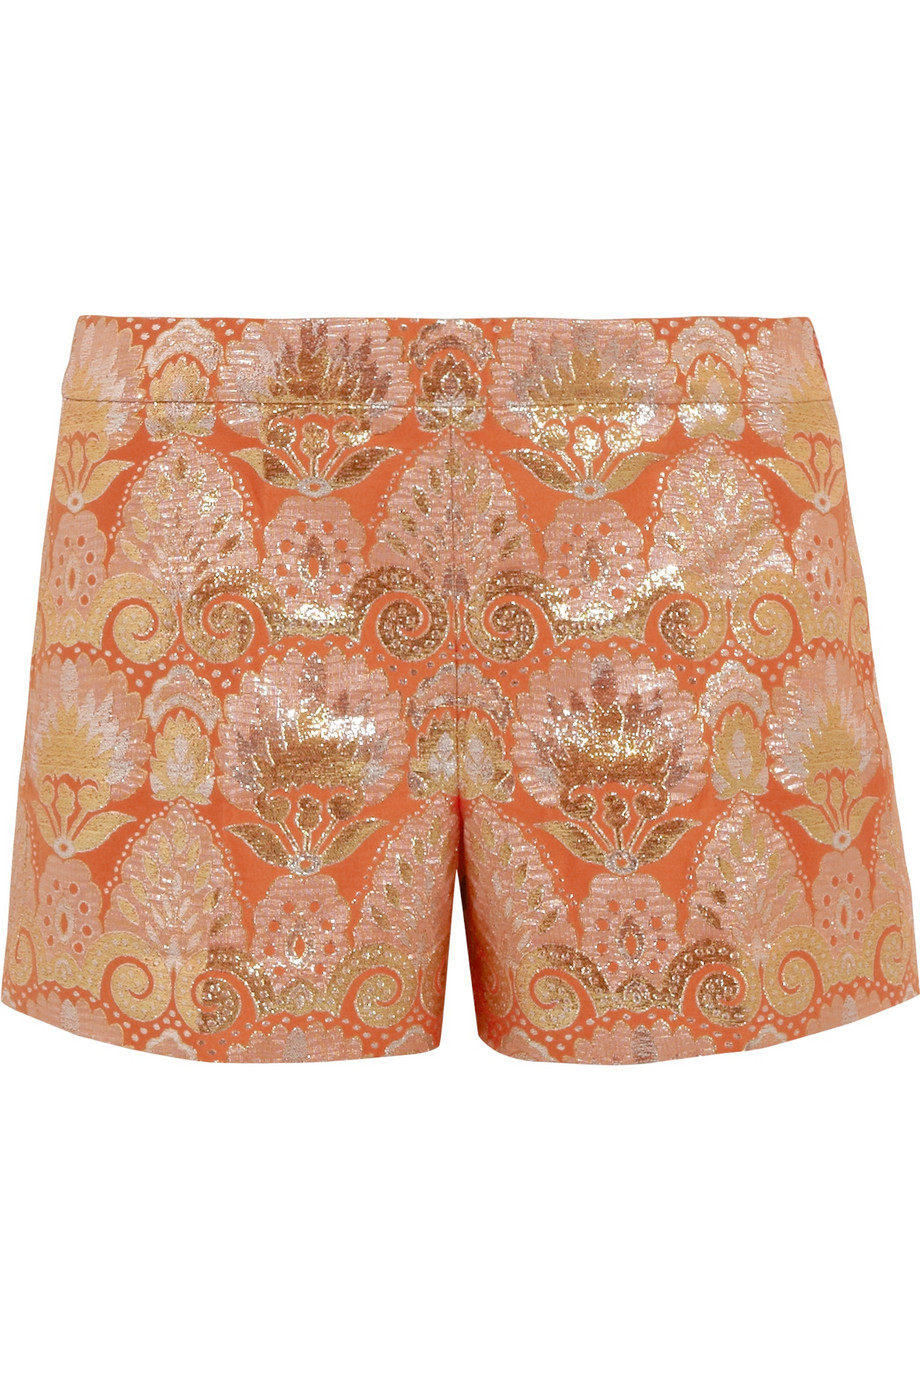 Lyst - J.crew Collection Brocade Shorts in Orange